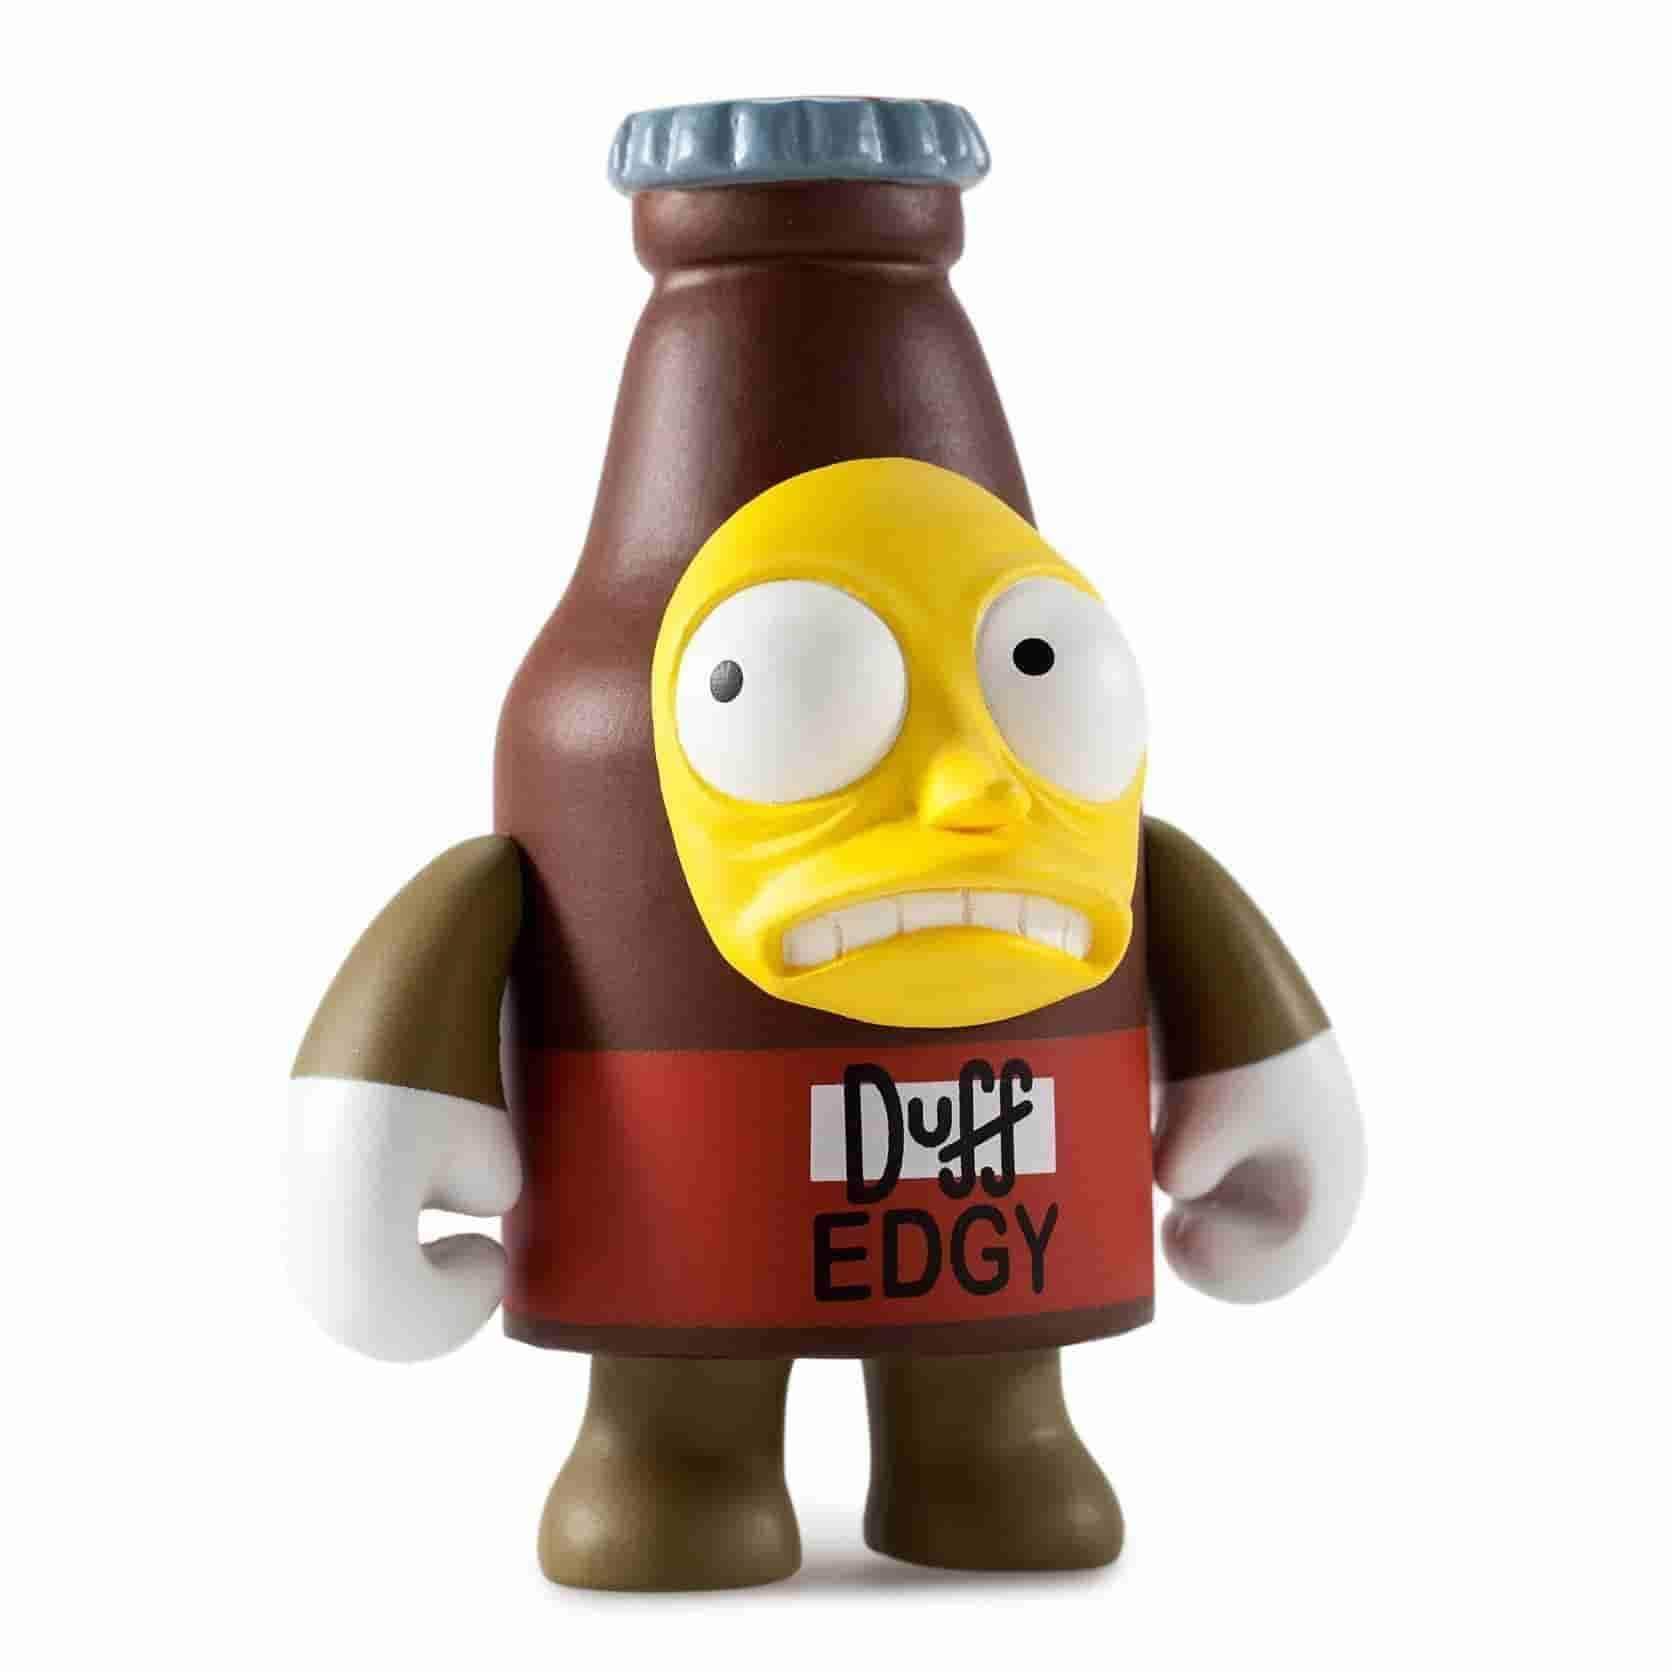 Edgy Duff Simpsons 25th Anniversary Mini Series by Kidrobot